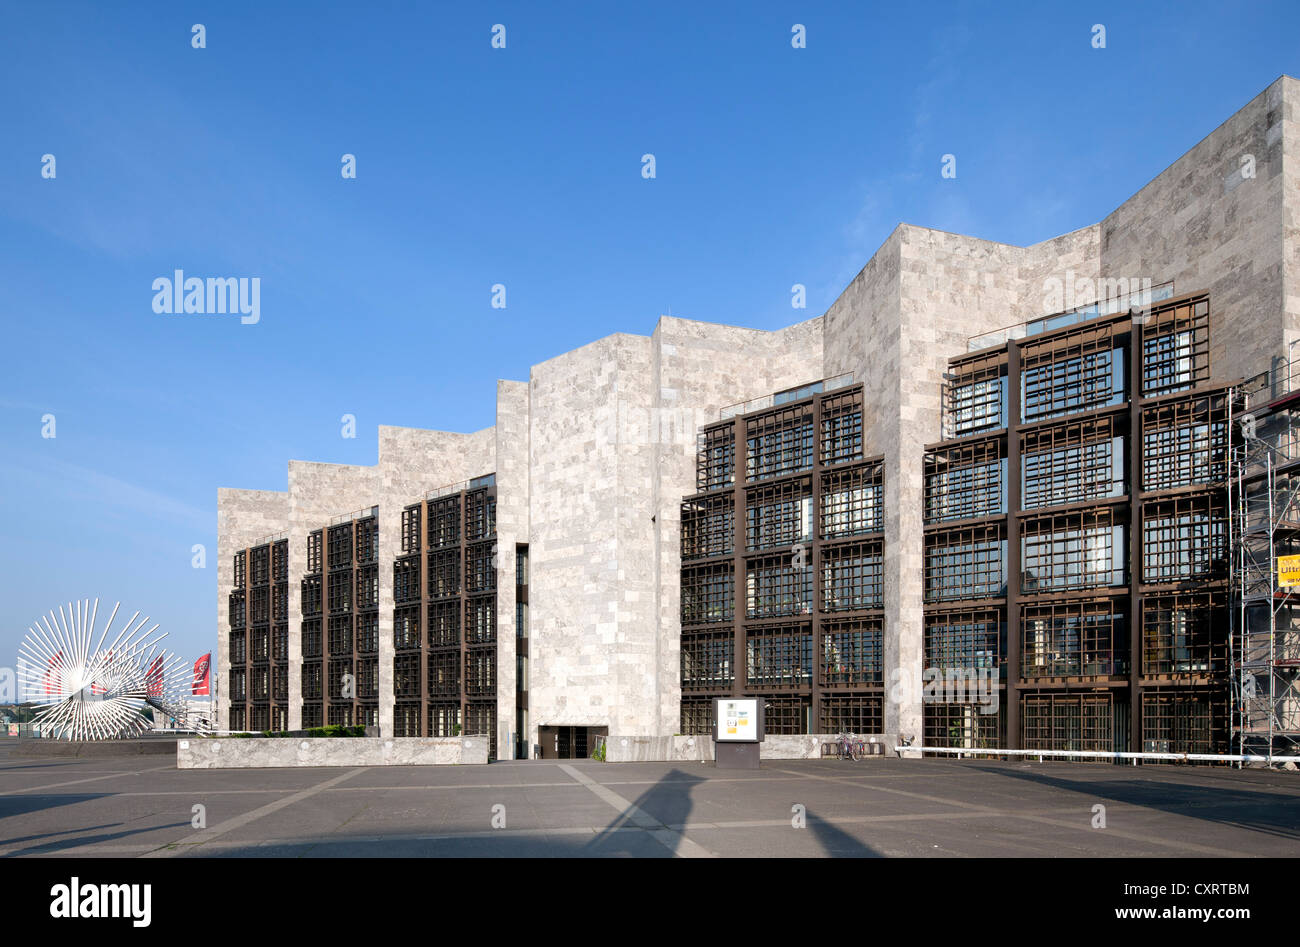 City Hall, City Council, architect Arne Jacobsen, Mainz, Rhineland-Palatinate, Germany, Europe, PublicGround Stock Photo